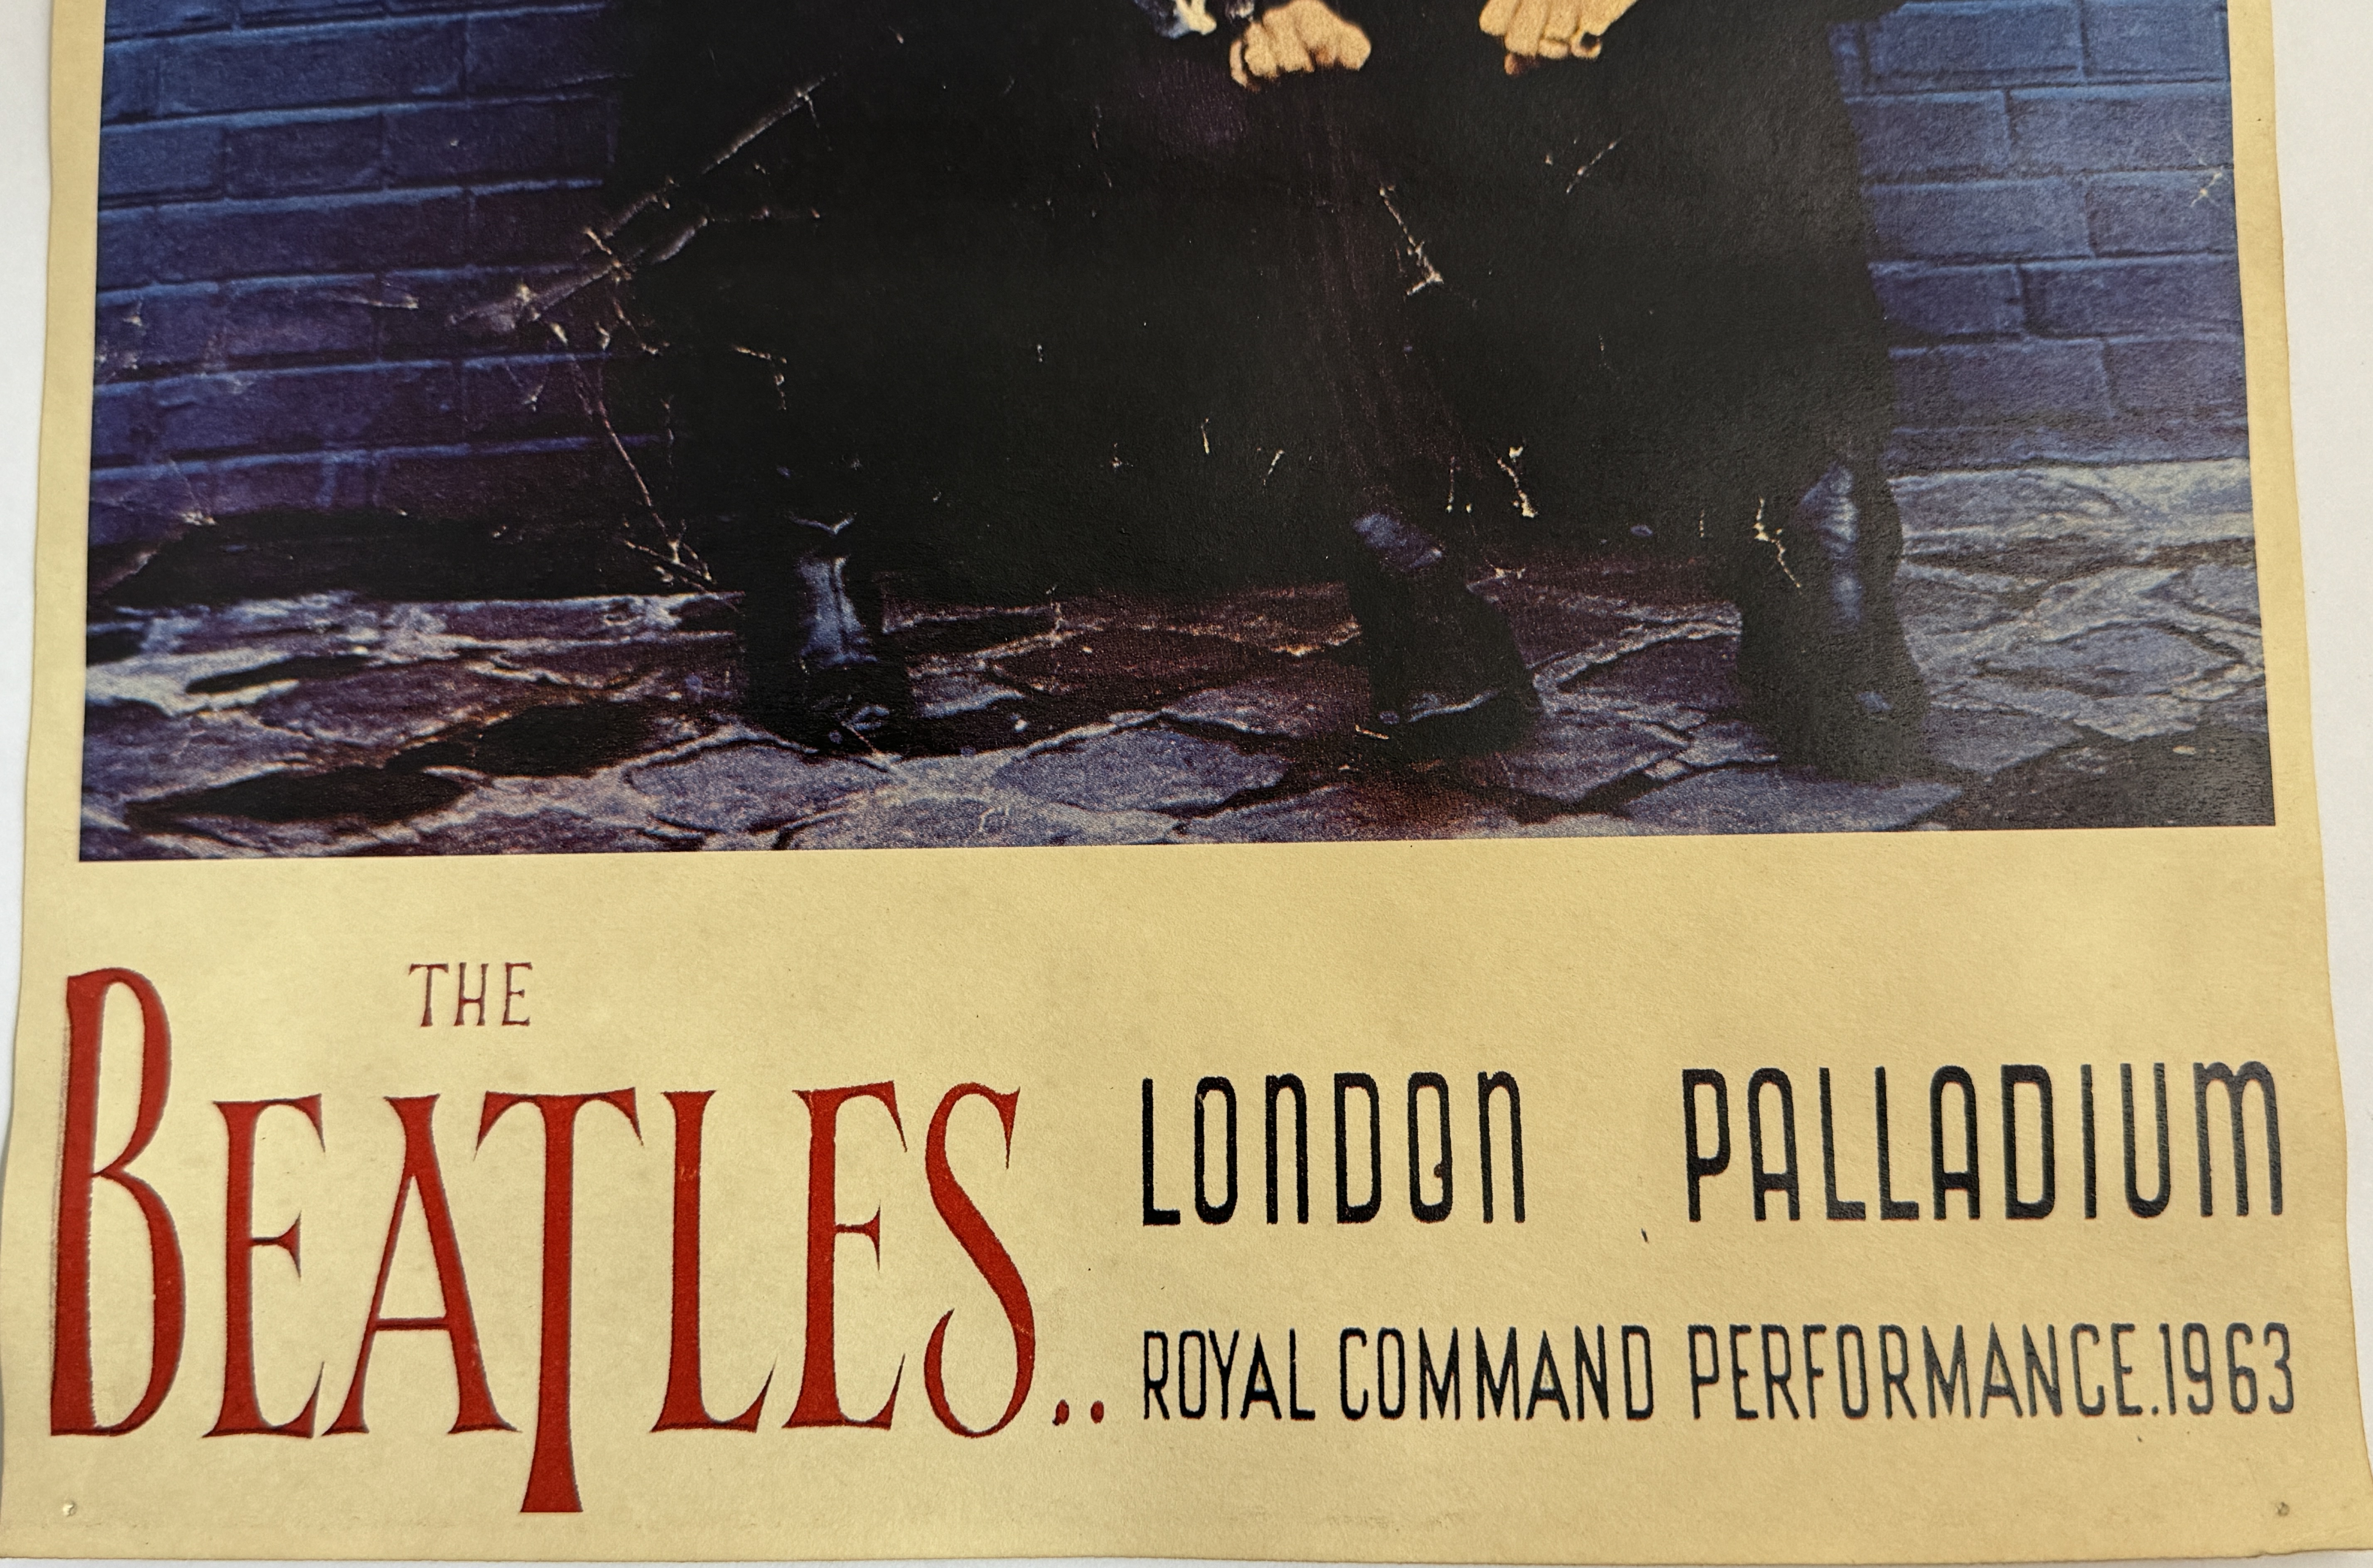 The Beatles Palladium Concert Poster - Image 2 of 4